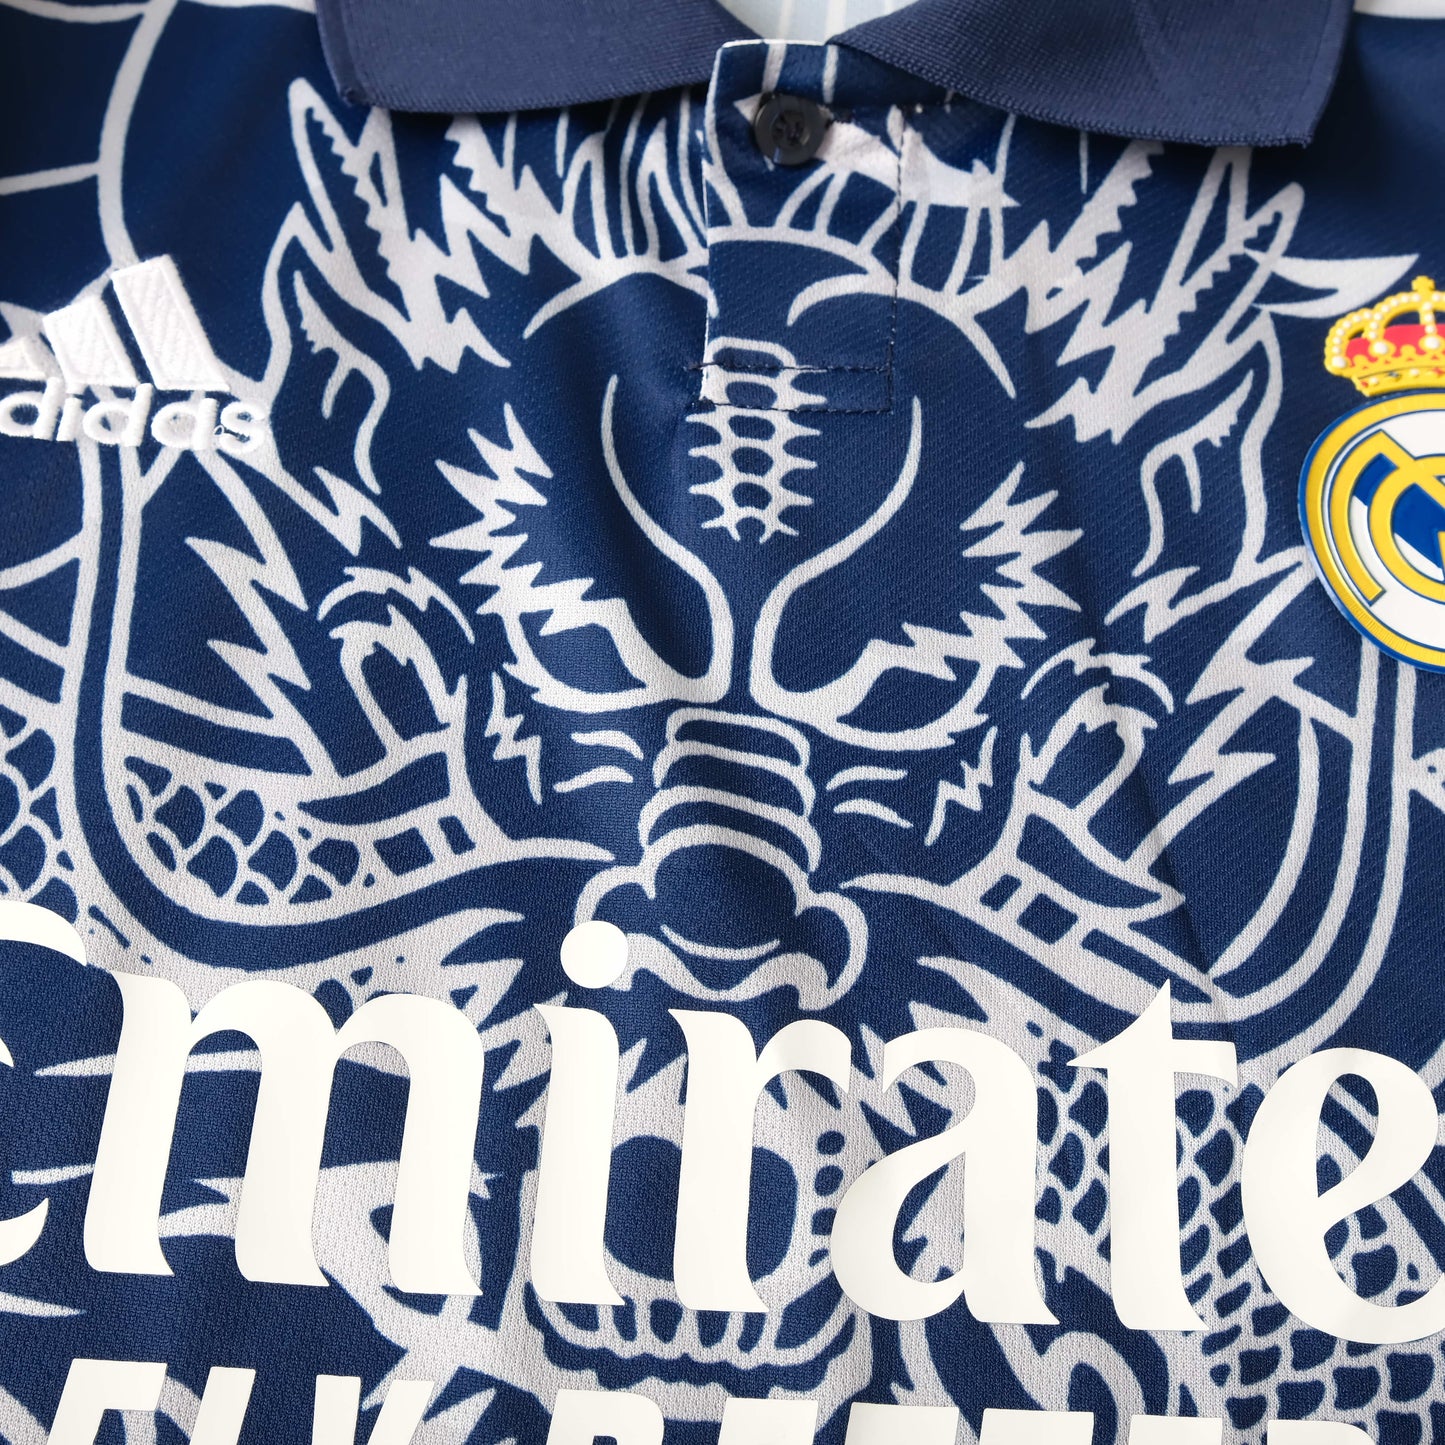 Real Madrid 23/24 "Blue Dragon" Jersey